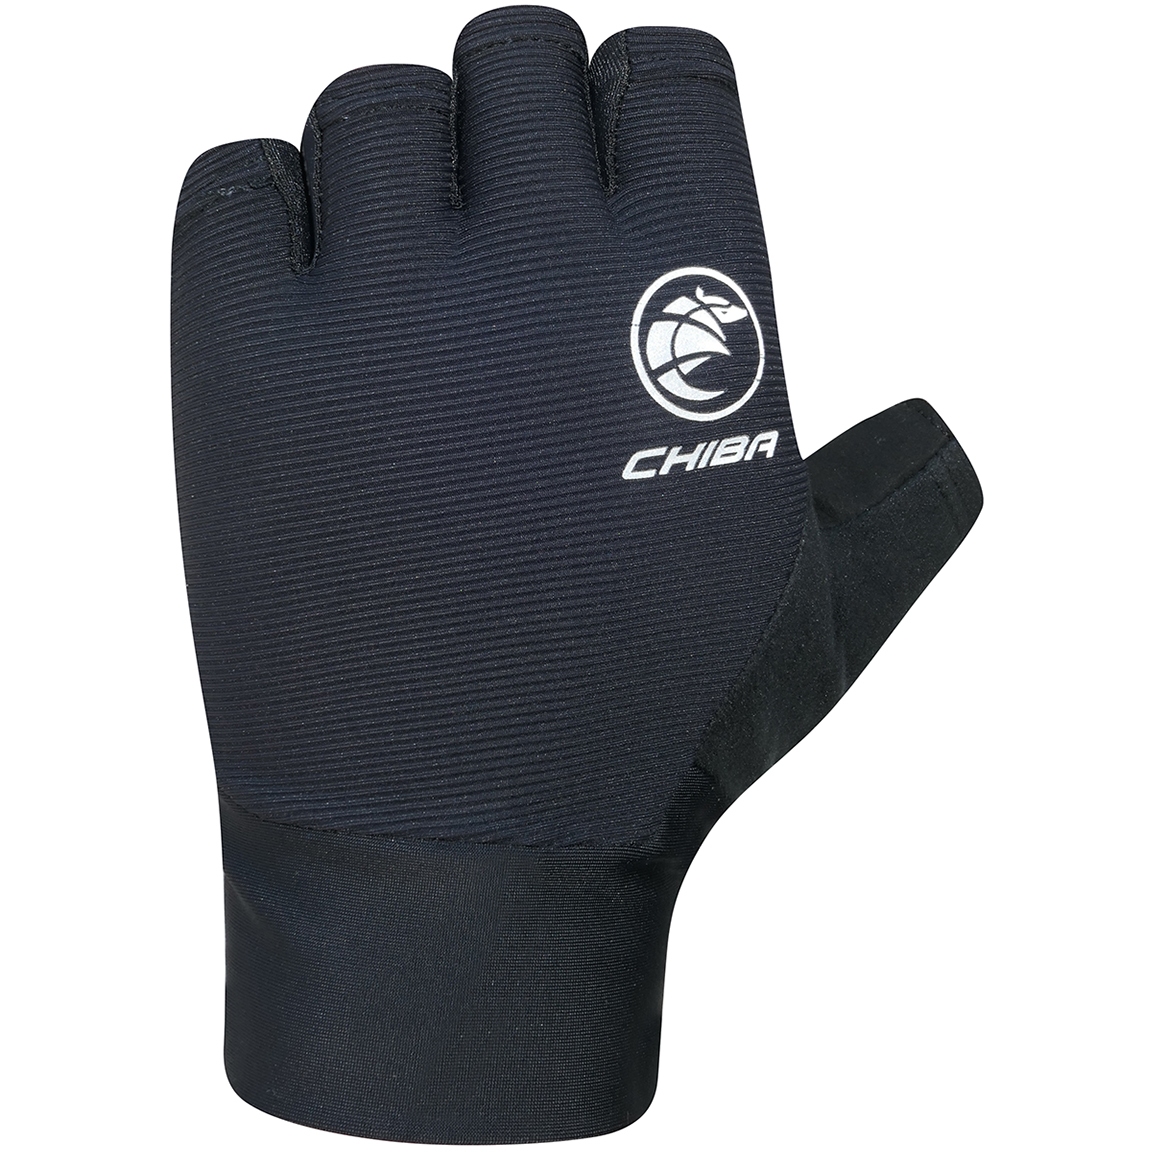 Image of Chiba Team Pro Bike Gloves - black